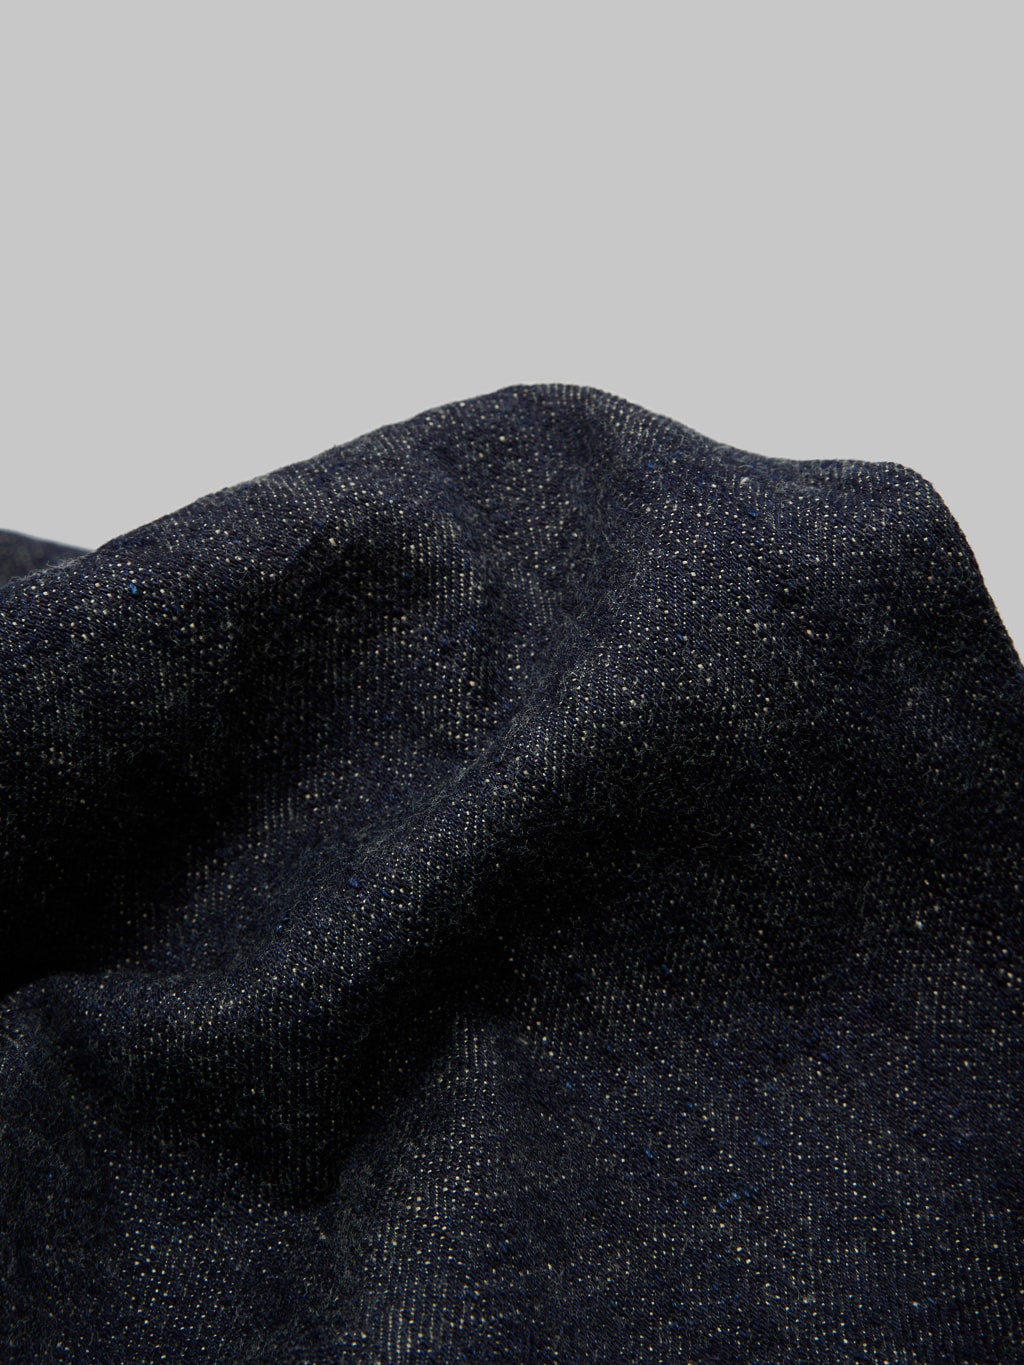 Tanuki Zetto Benkei High Tapered Jeans fabric texture